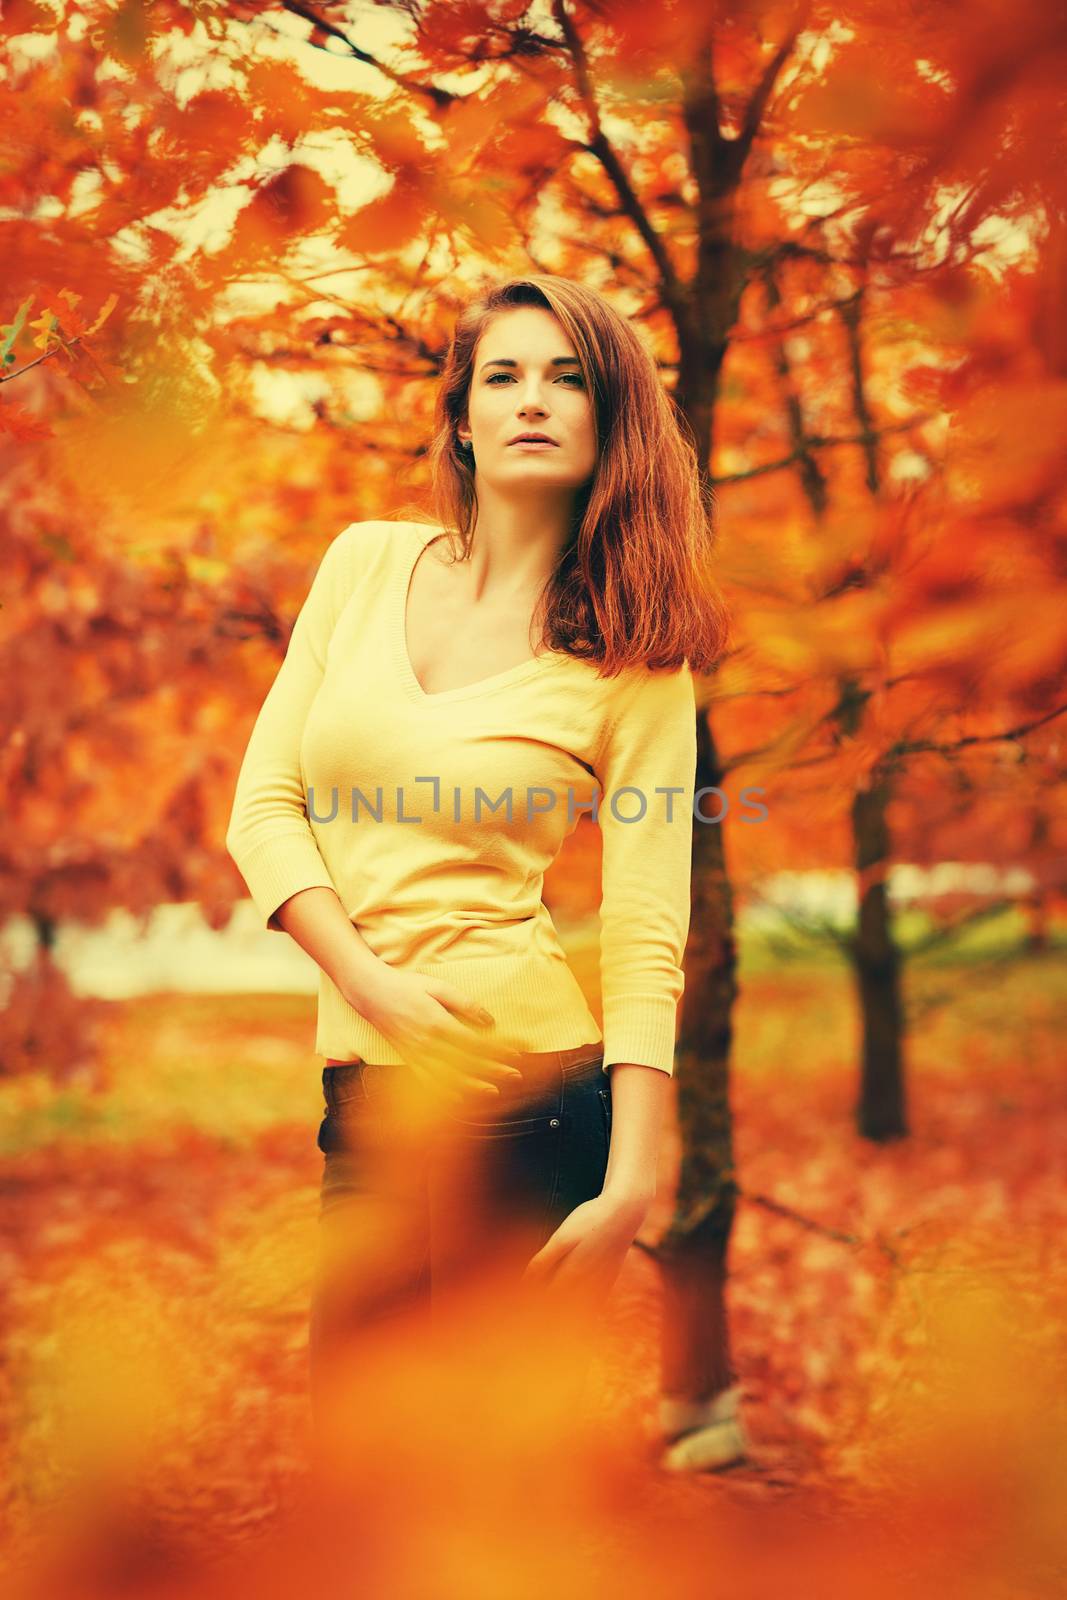 attractive fashion girl pose in autumn colorful nature